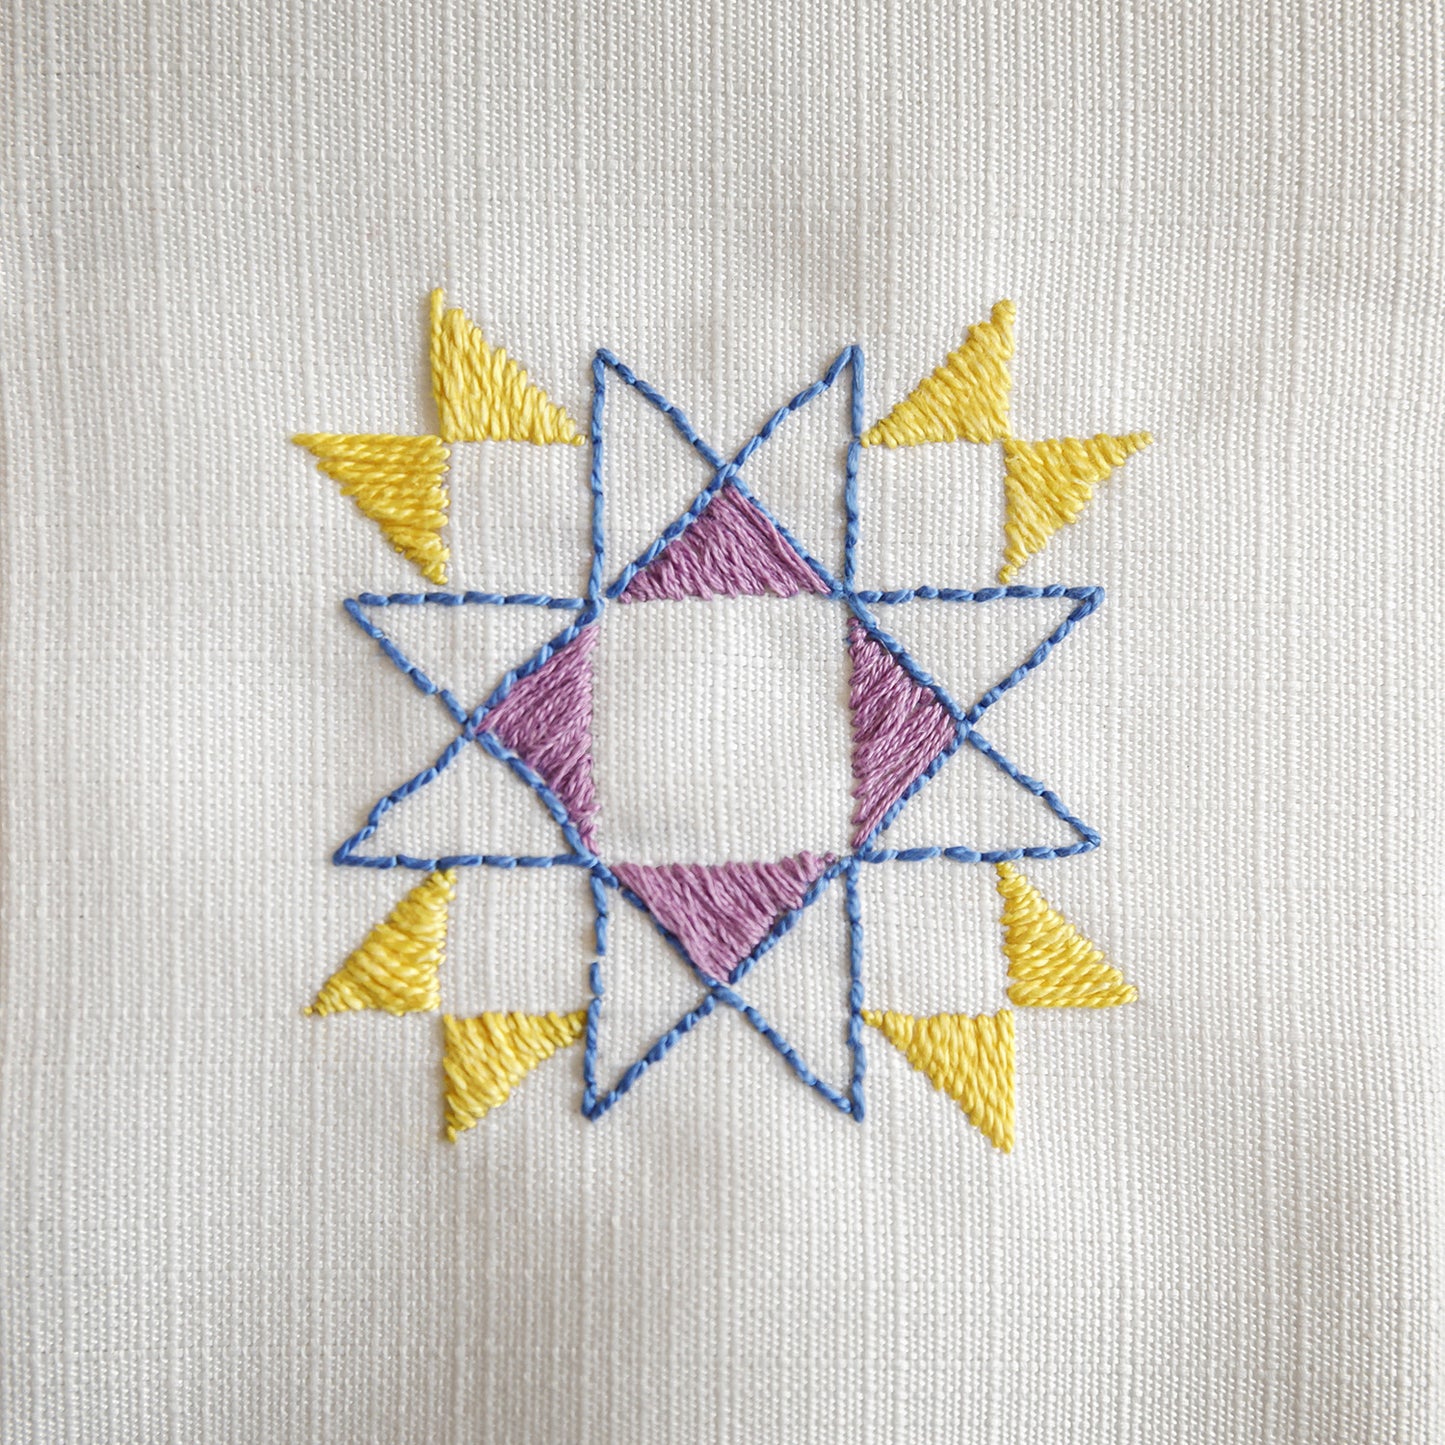 PREORDER - Learn Embroidery Stitch by Stitch with Missouri Star Alternative View #19